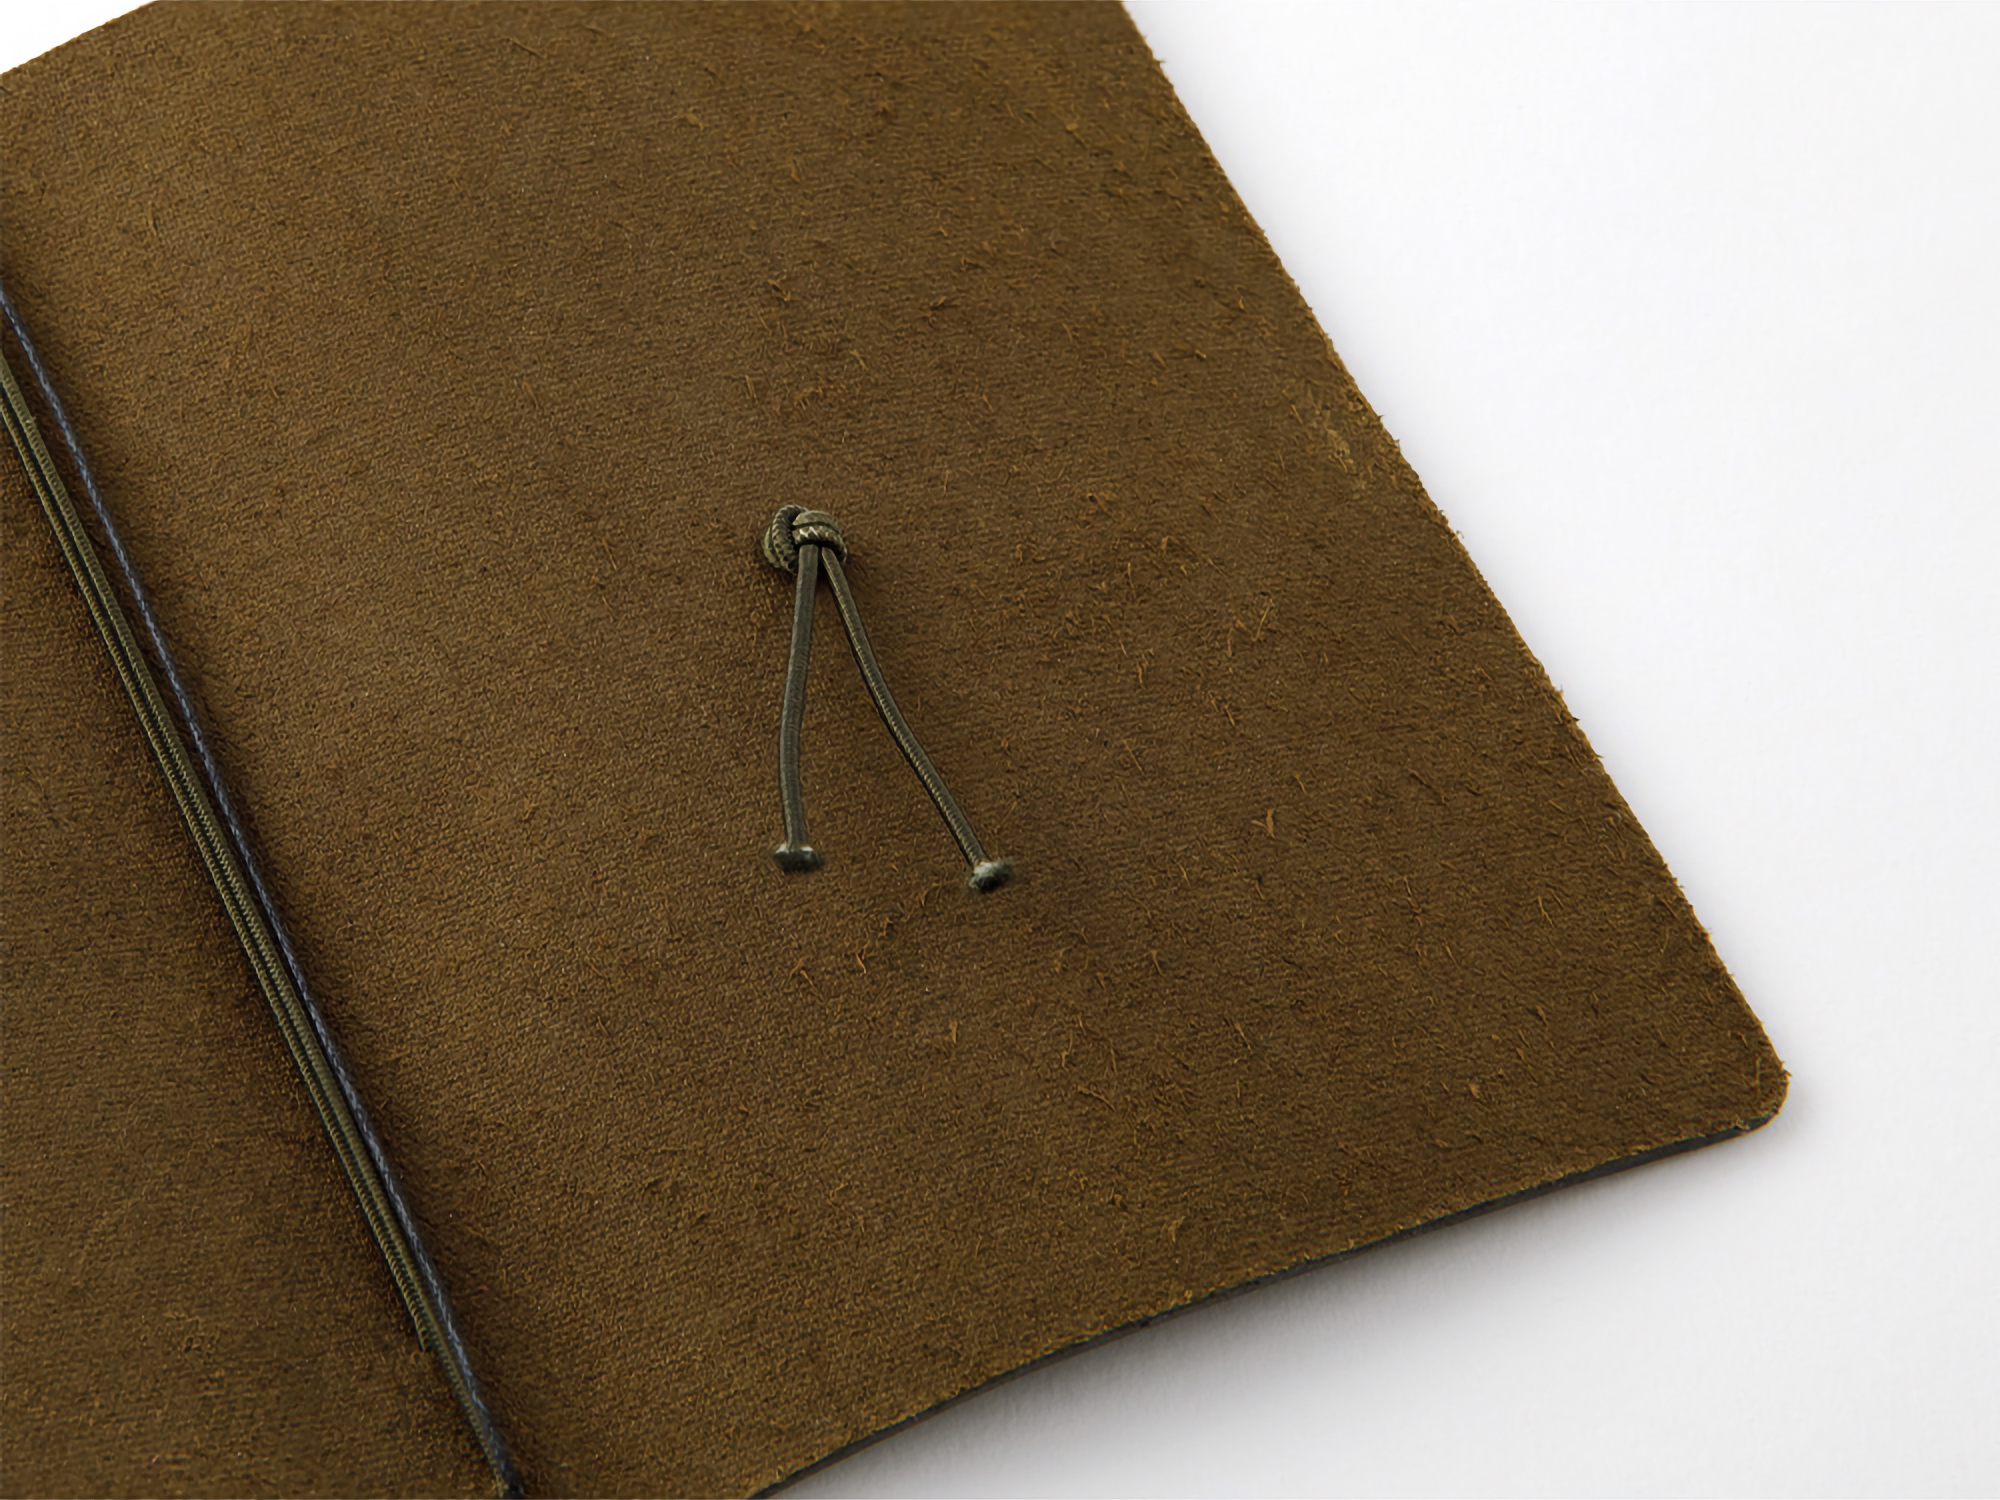 Traveler’s Company Traveler's notebook – Olive, Passport size (Starter Kit)